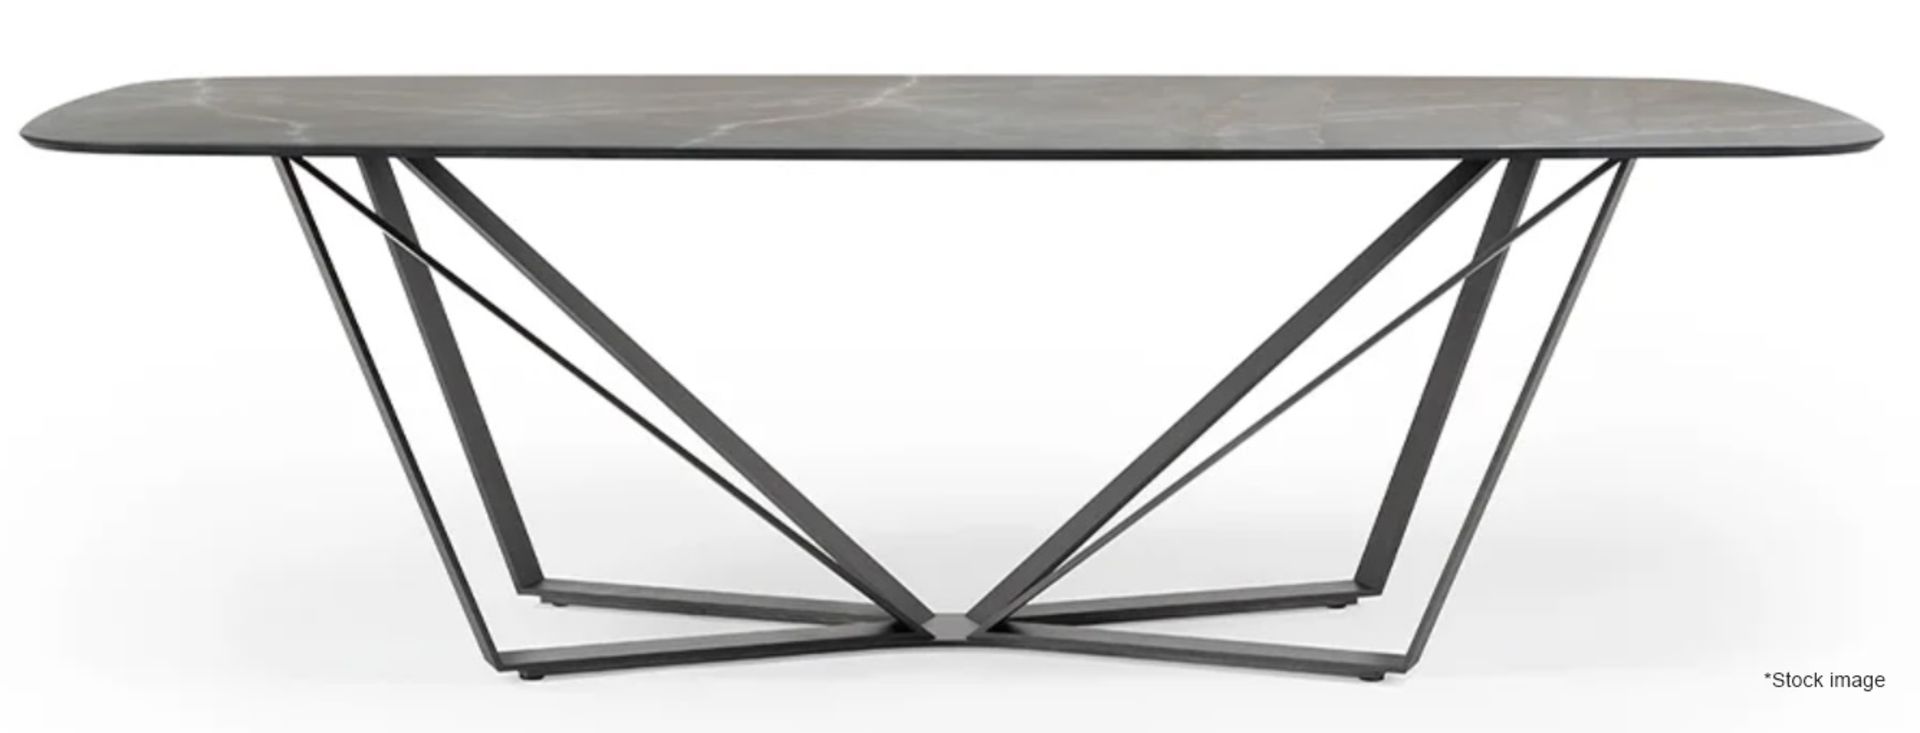 1 x REFLEX 'Papillon 72' Designer Table Base with a Satin Titanium Finish - Original RRP £2,150